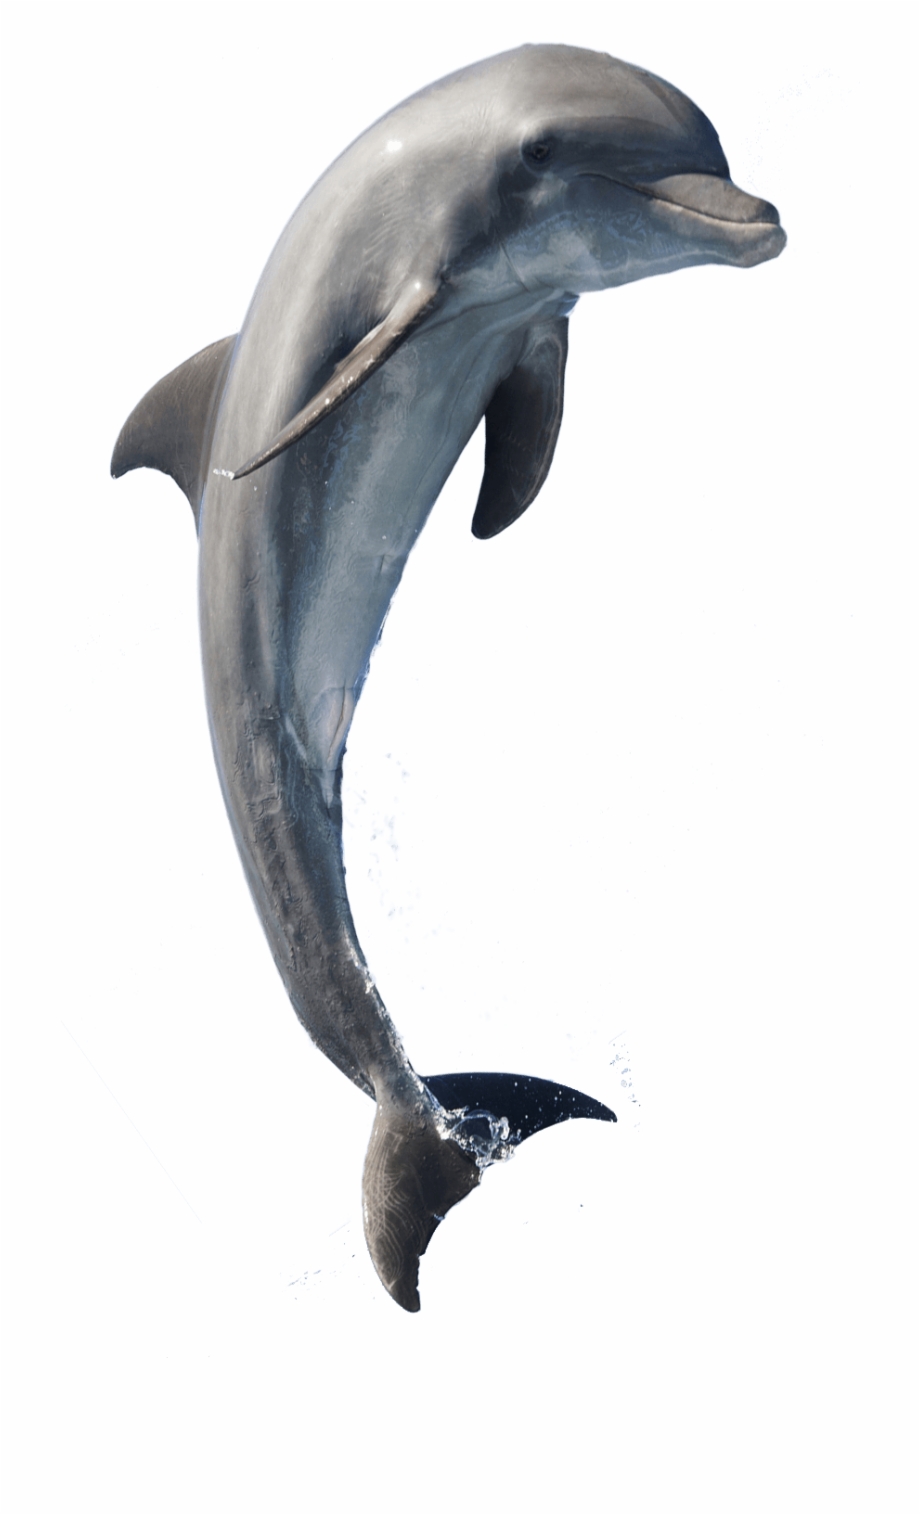 V 6 1 209 8 Kbytes Dolphin Hd